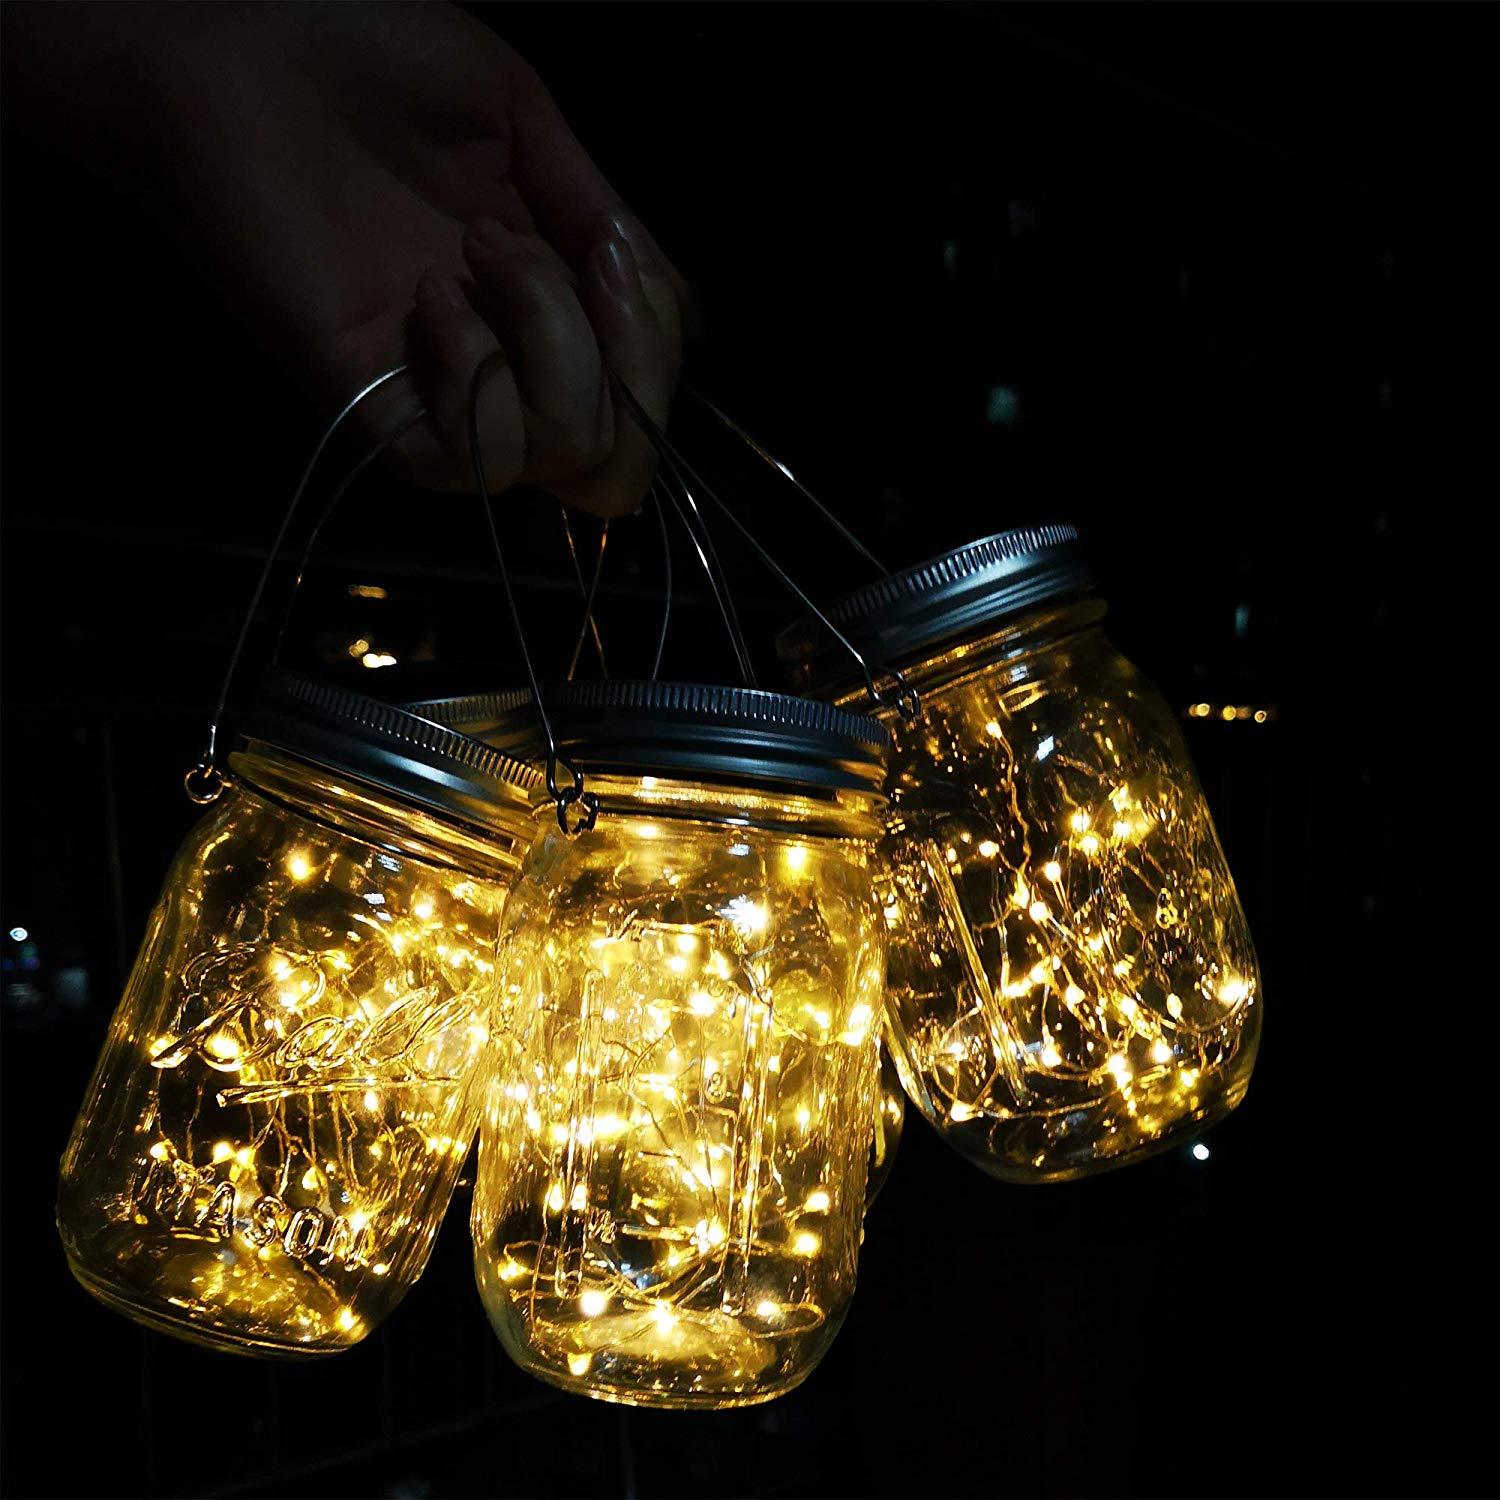 Mason Jar With Fairy Lights - oddgifts.com